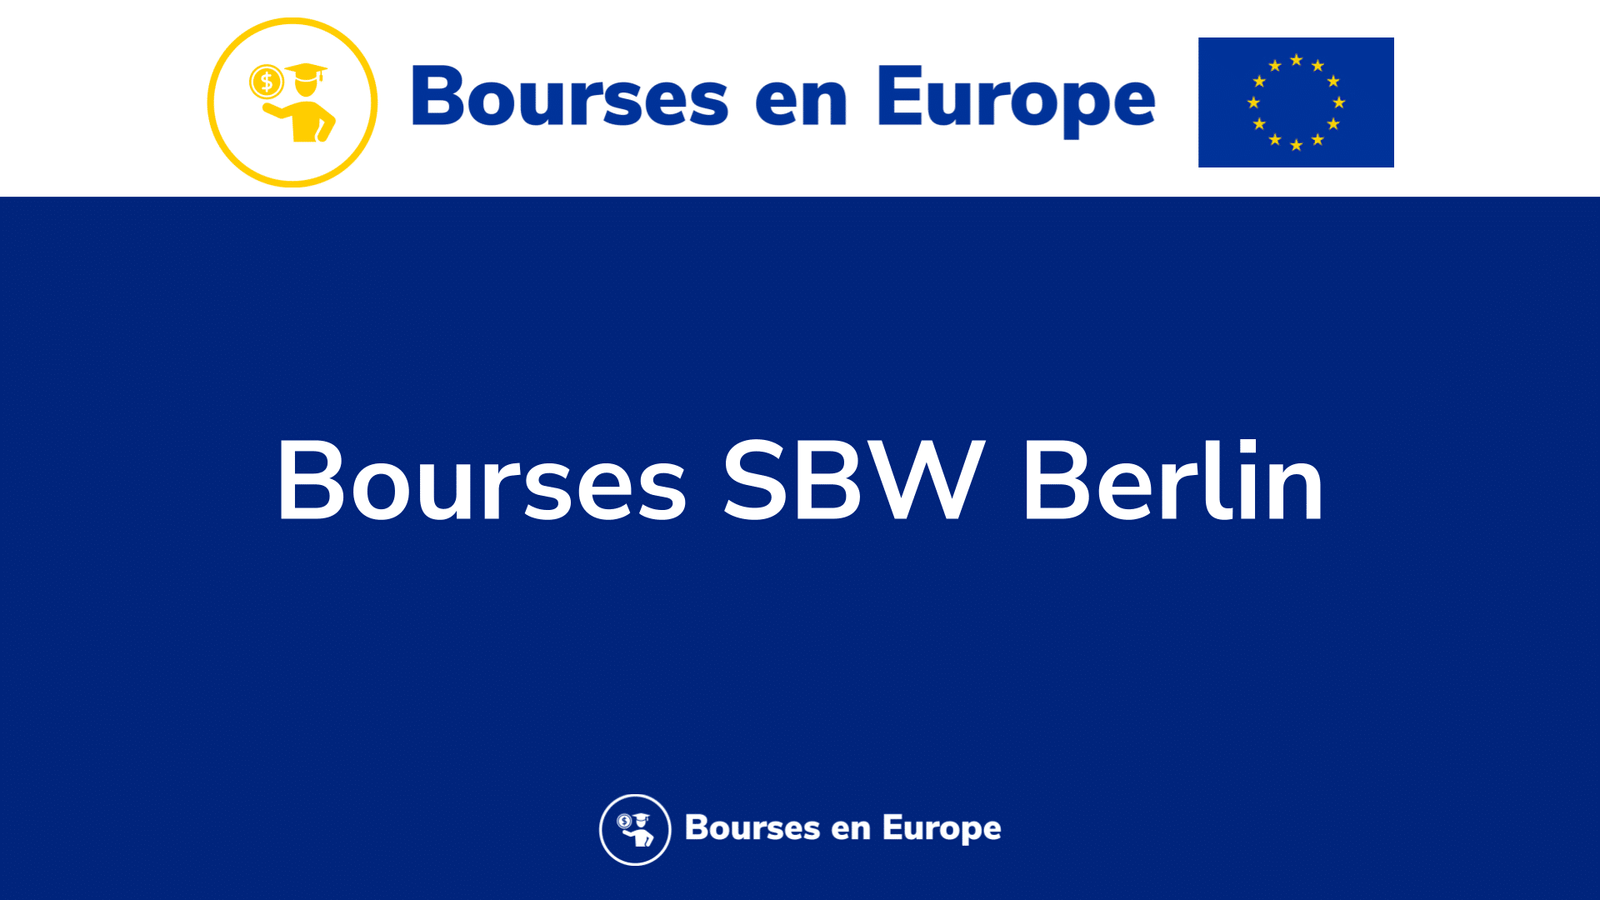 Bourses SBW Berlin